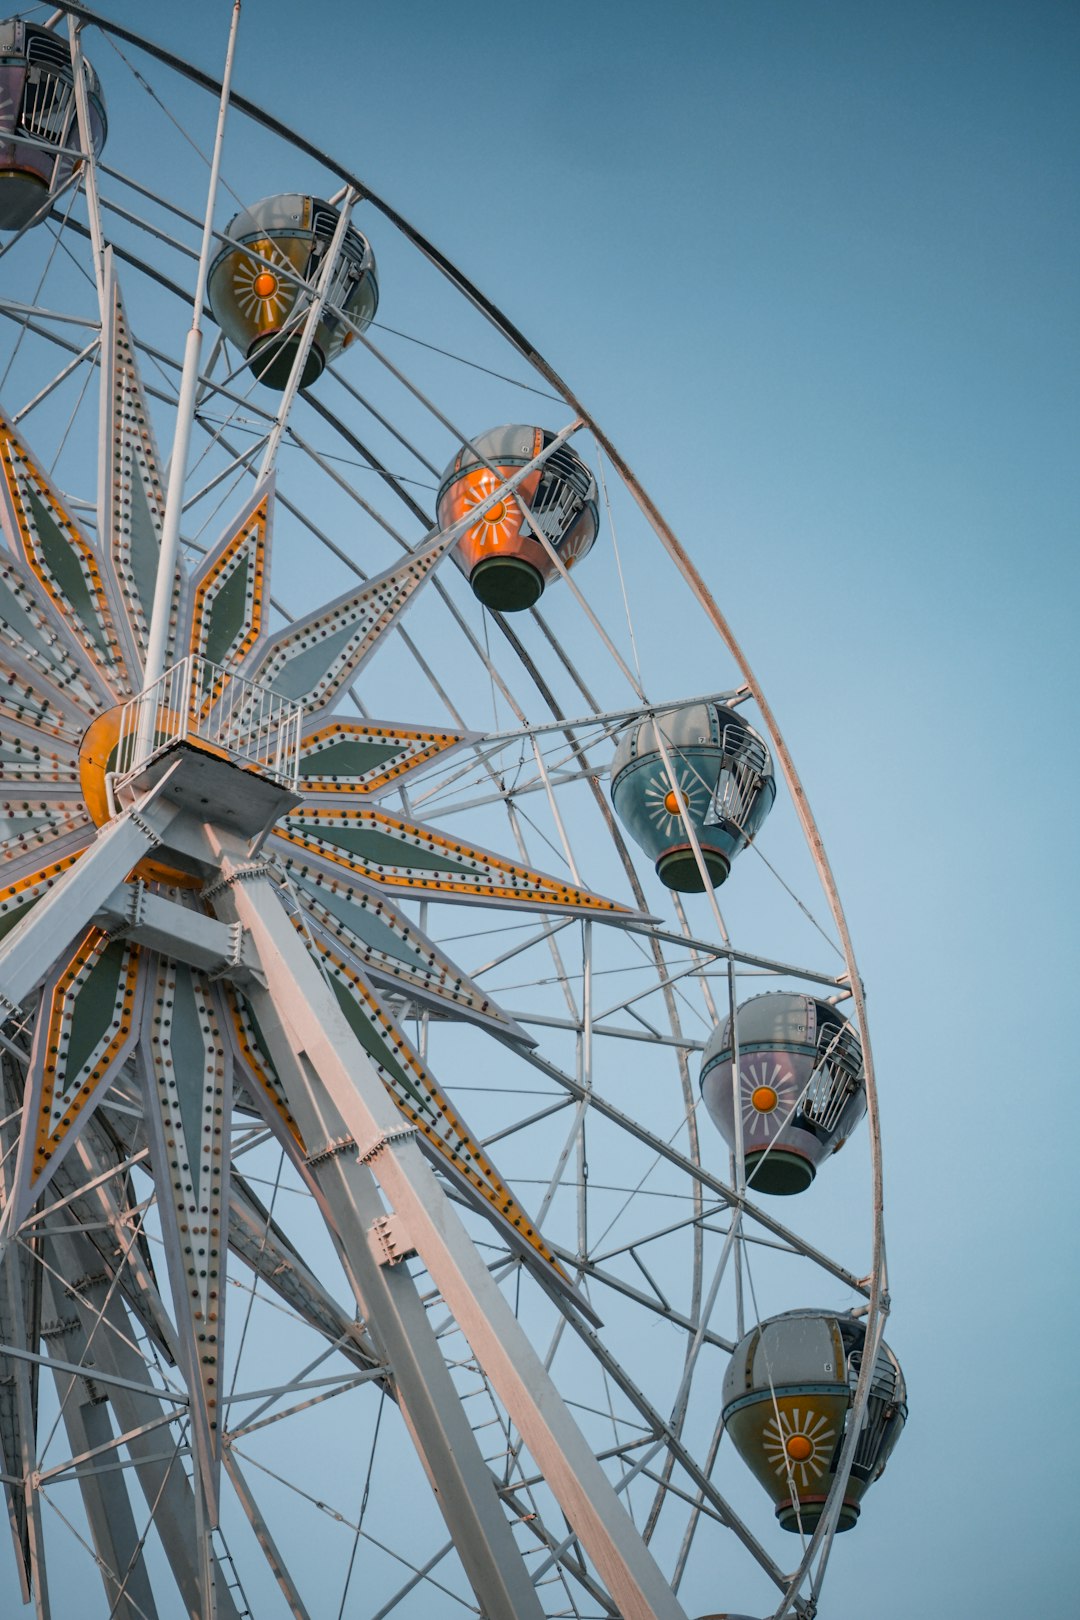 Ride a Ferris Wheel to reach the sky